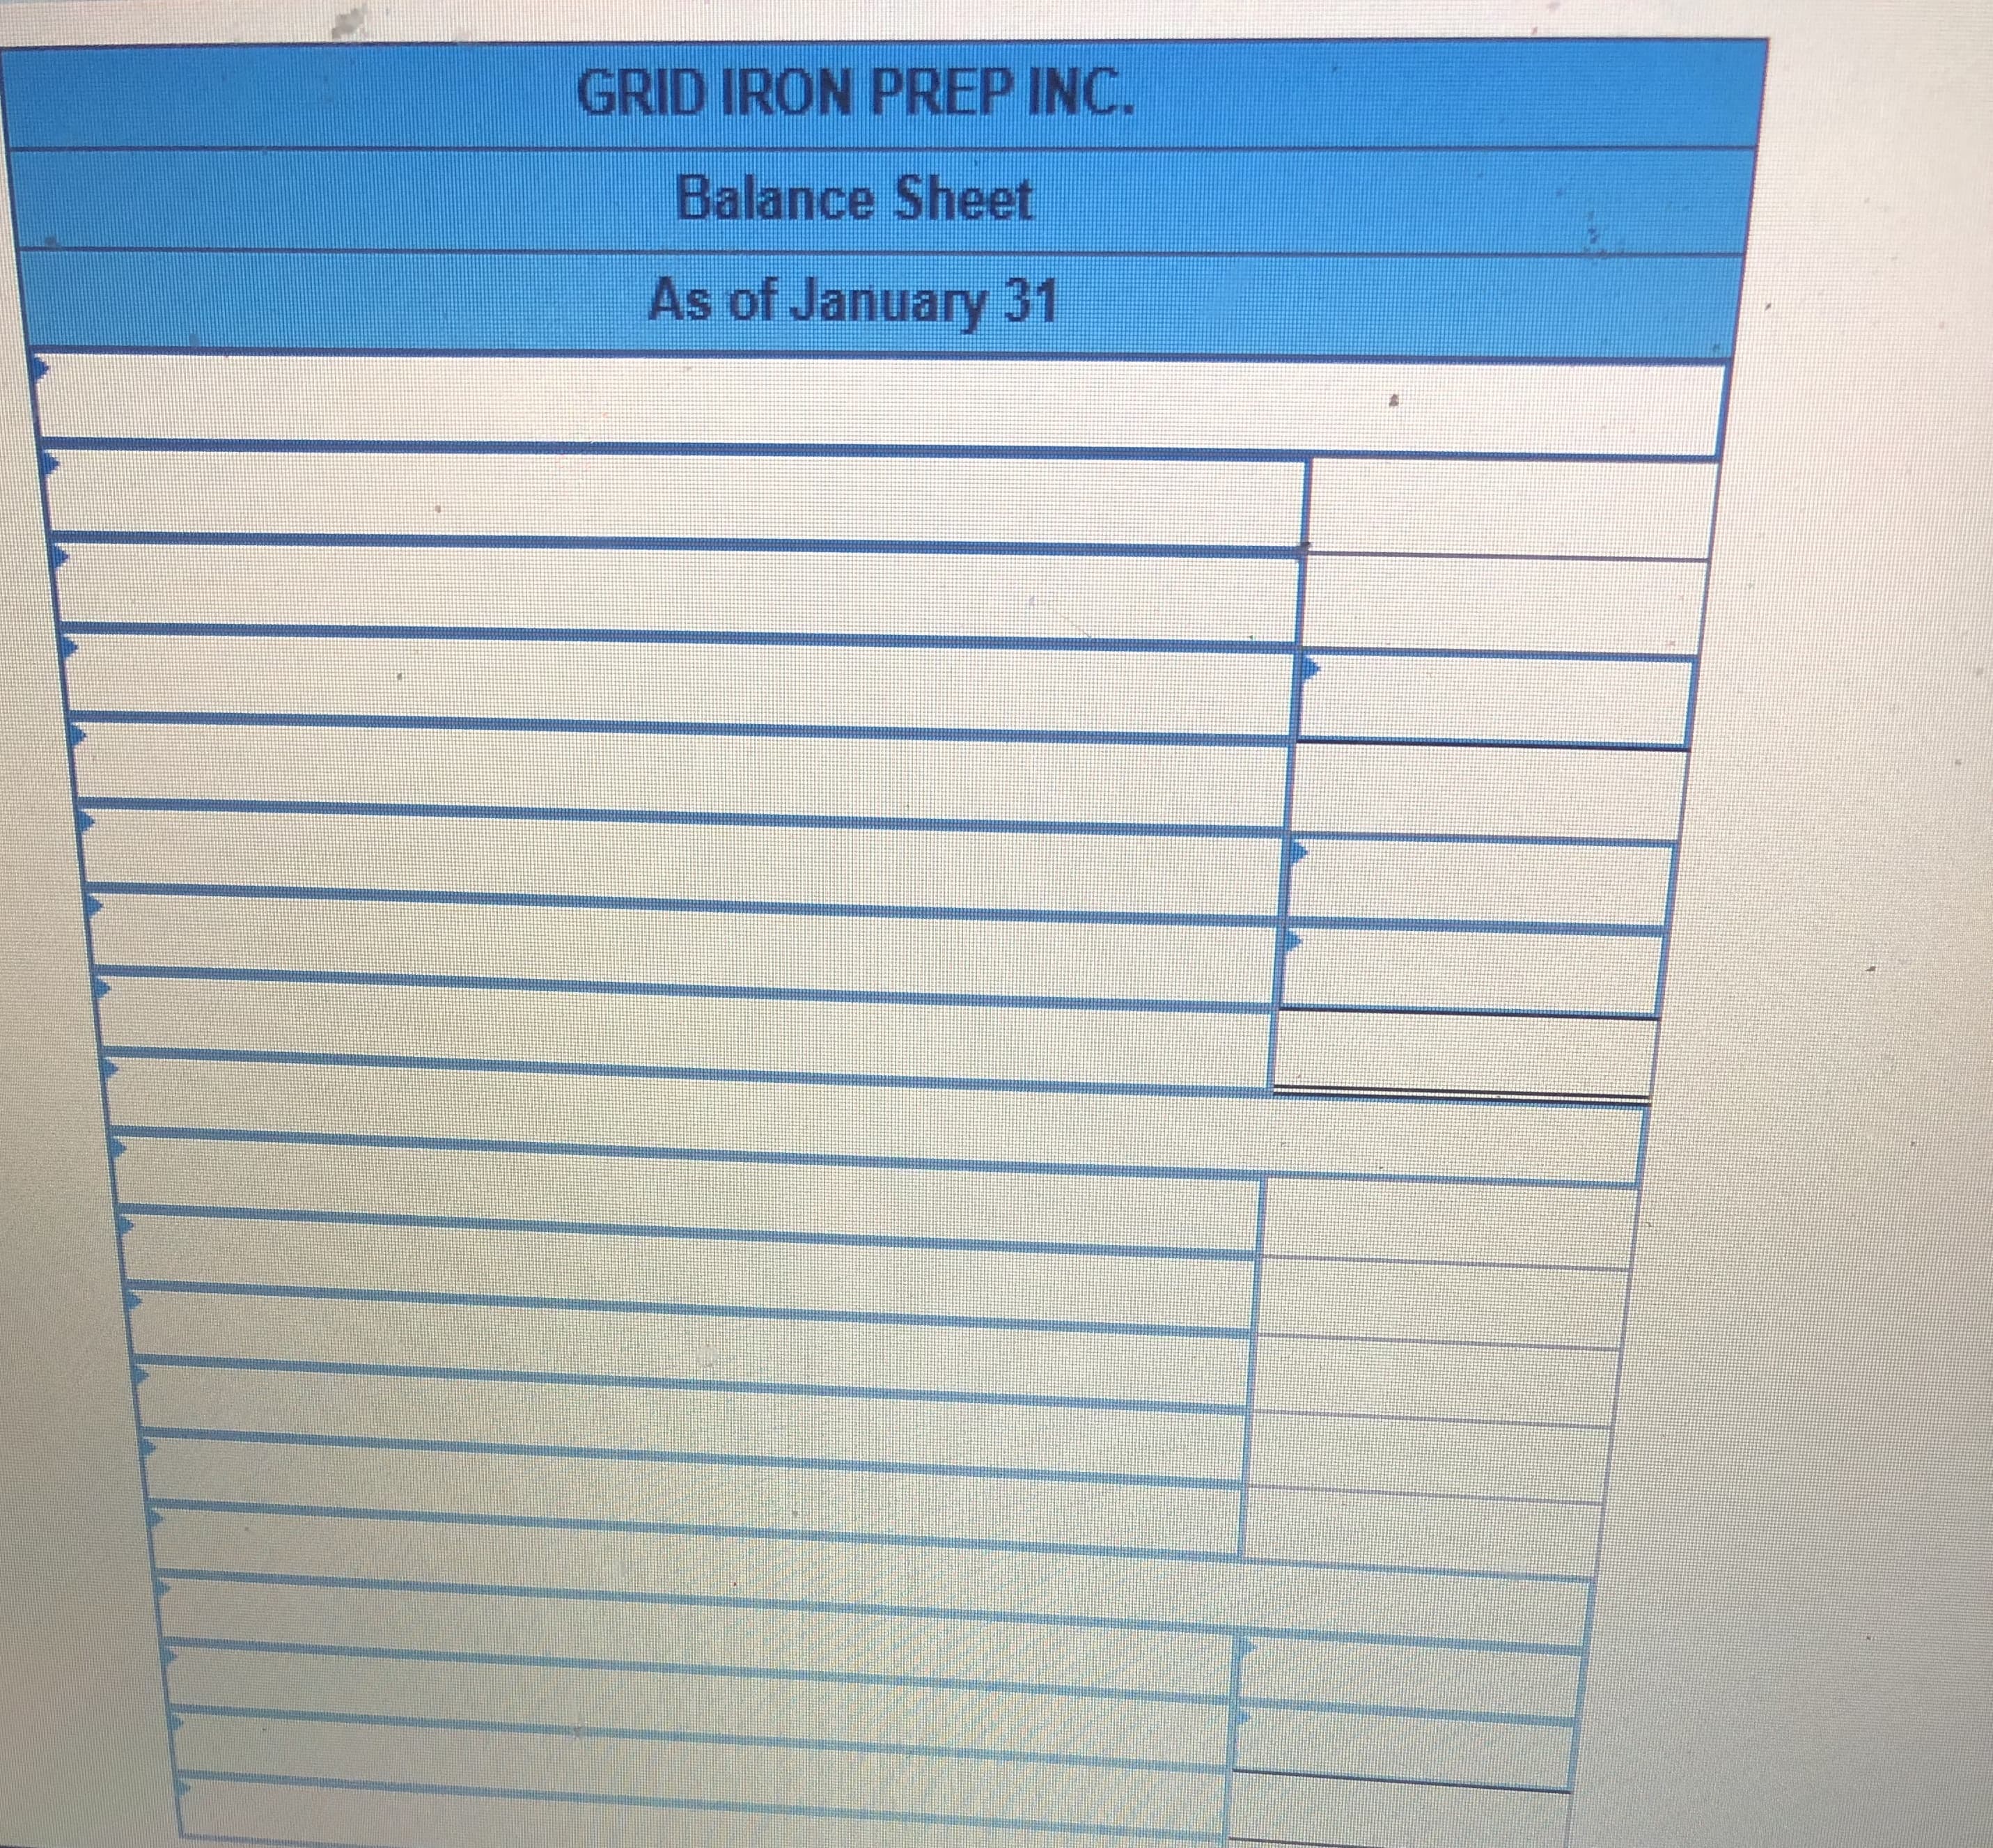 GRID IRON PREP INC.
Balance Sheet
As of January 31
